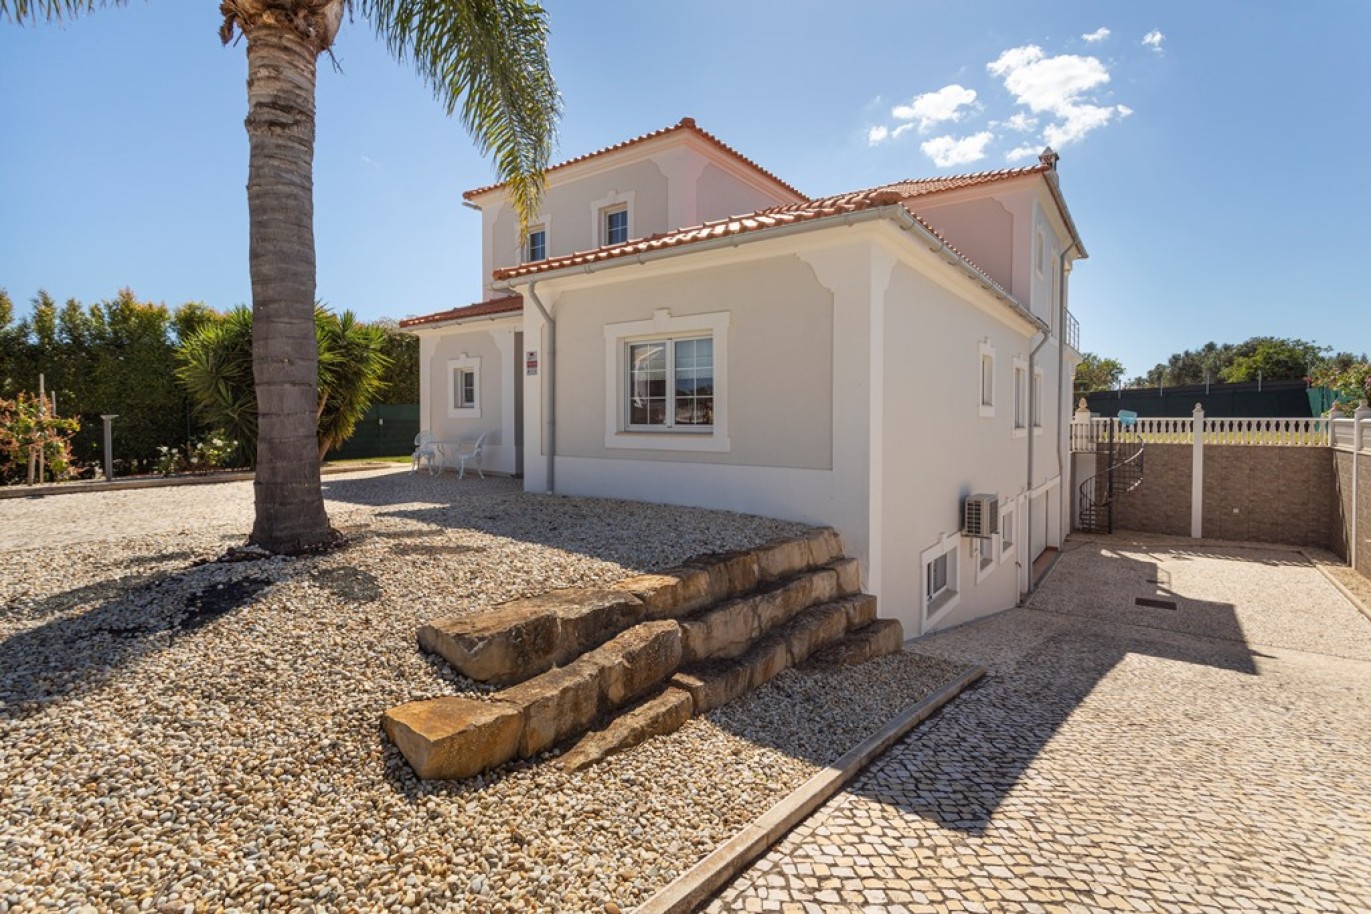 Moradia V5 com piscina, para venda em Vilamoura, Algarve_264466